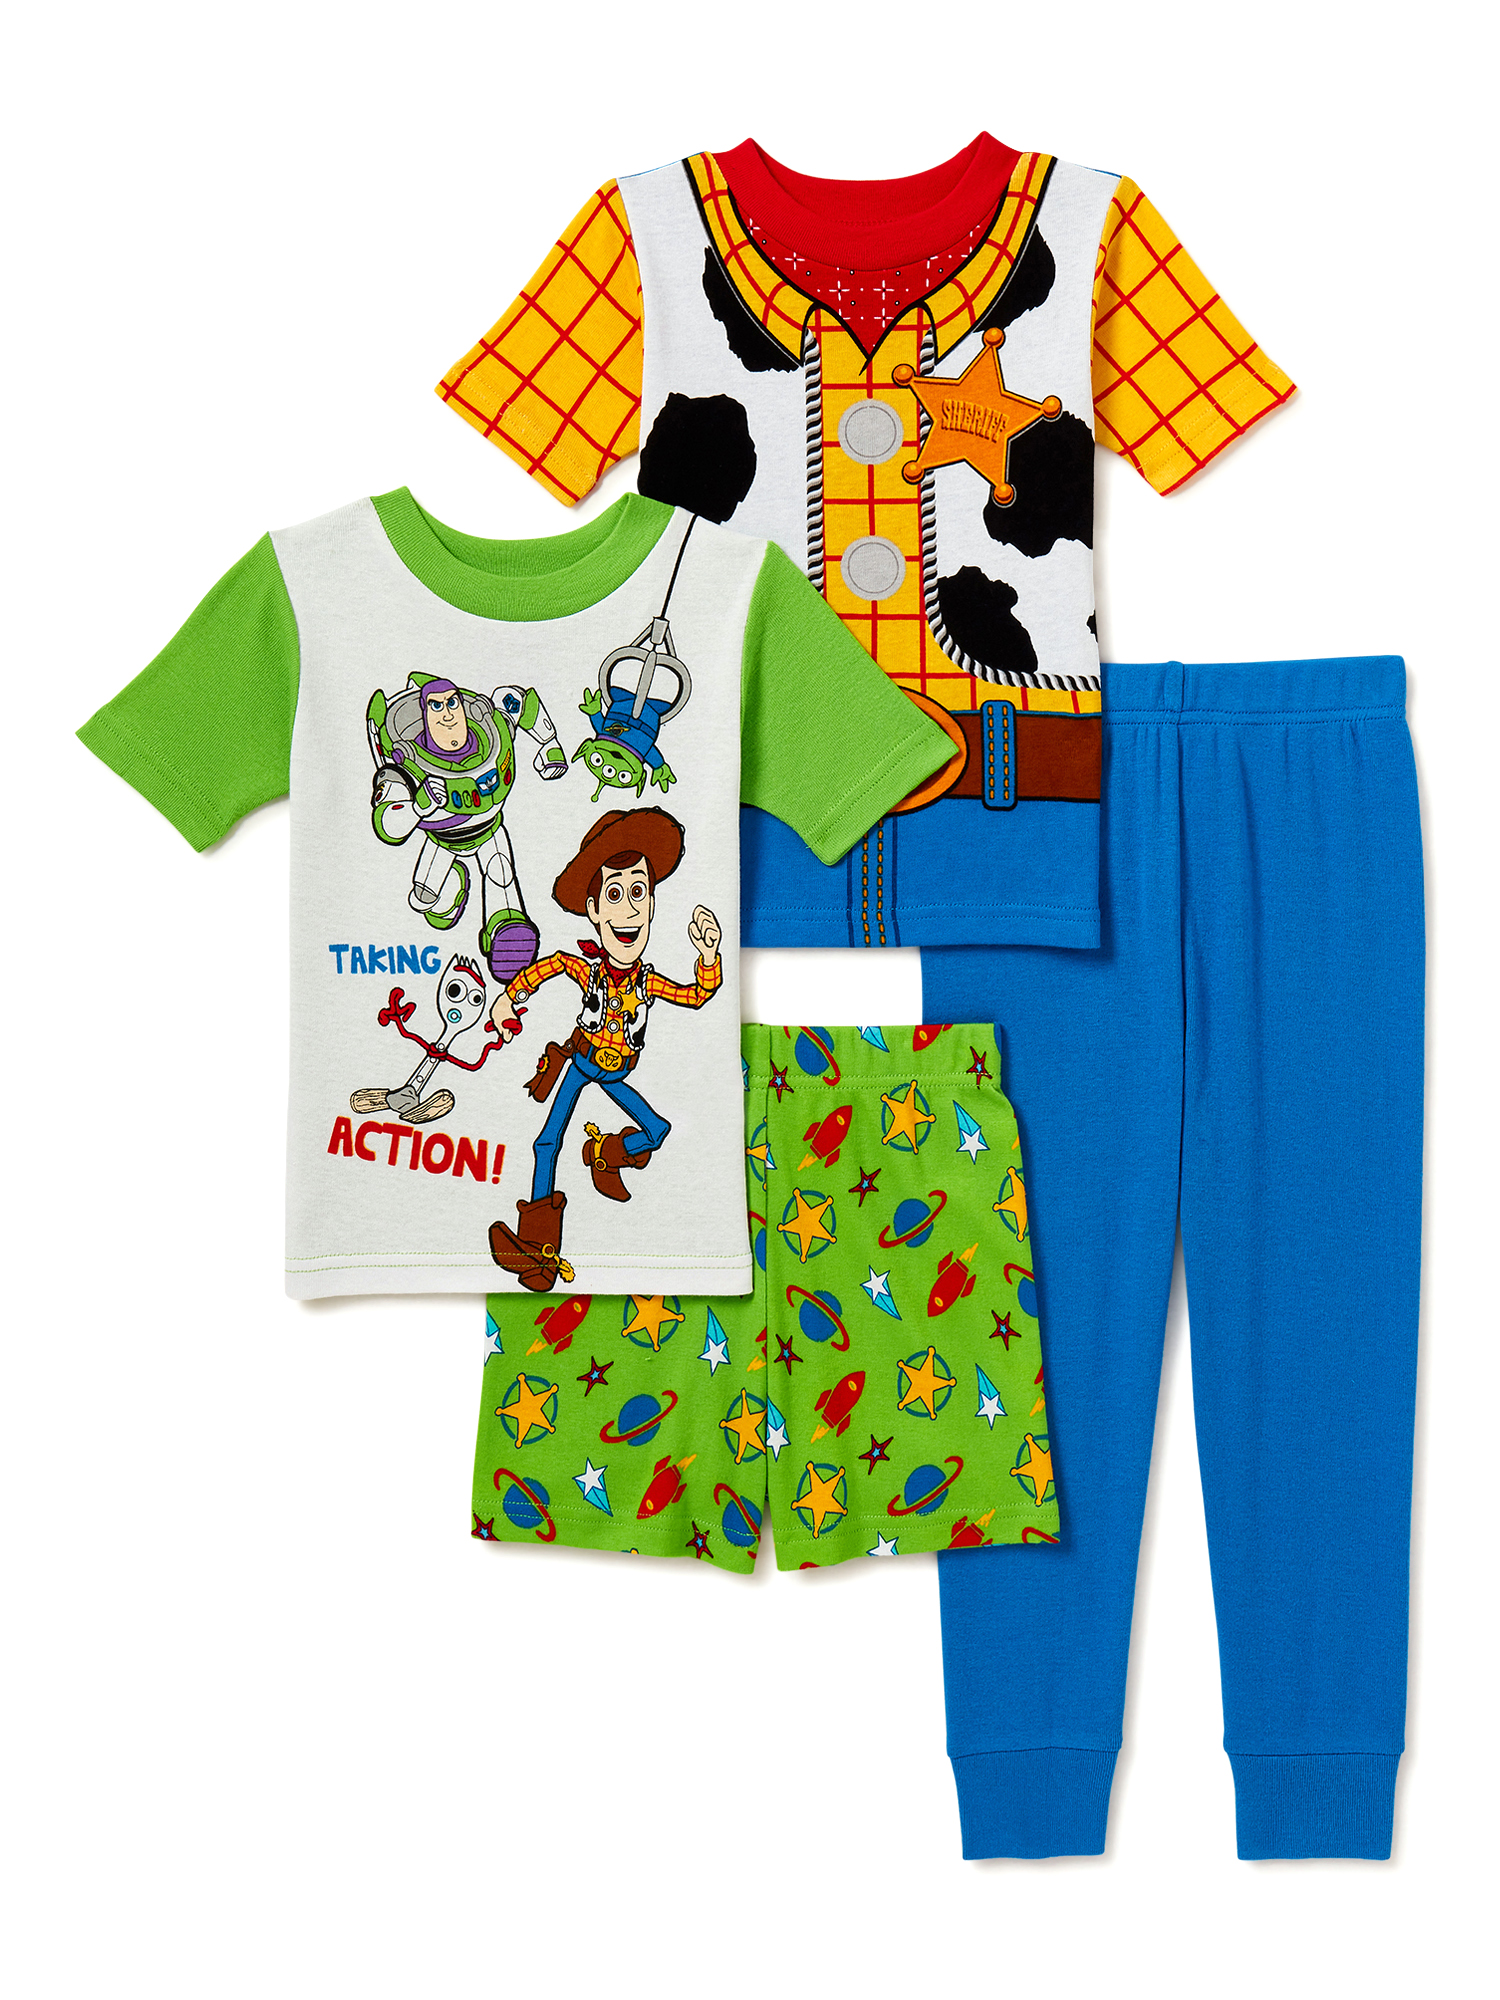 Boy's Youth Disney Pixar Toy Story 4 Cotton Pajamas 2 Sets Size 10